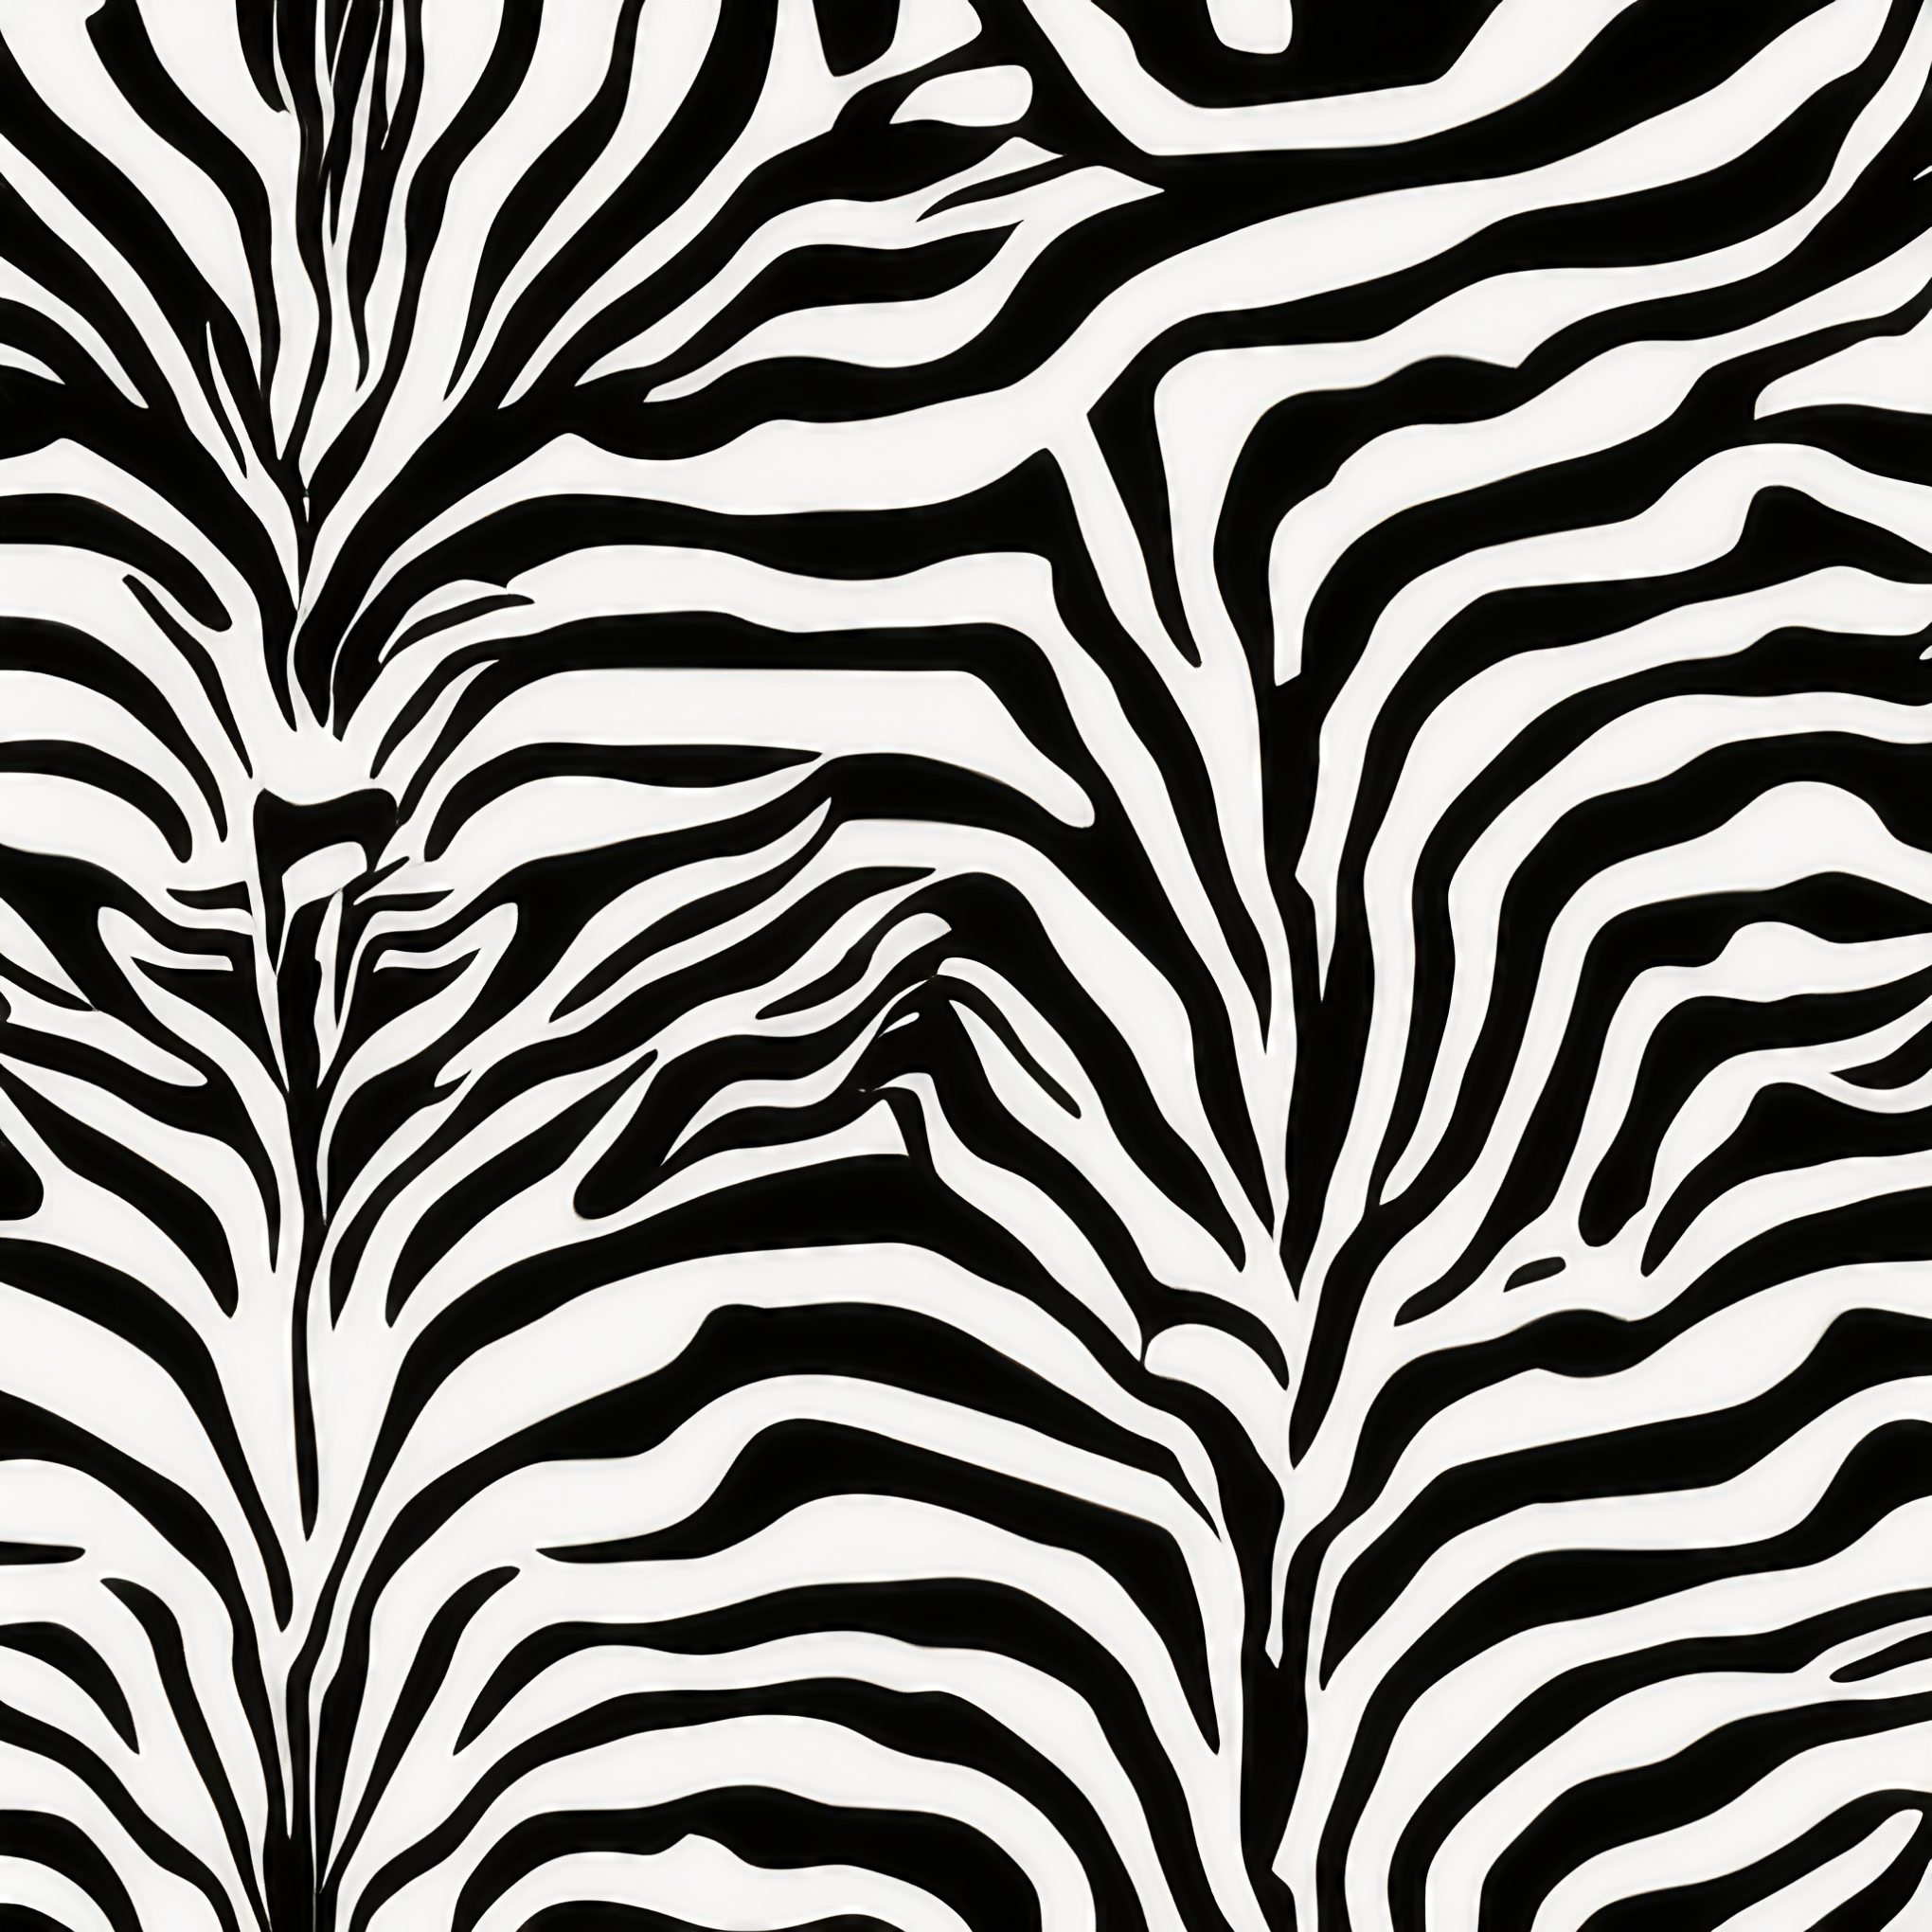 Zebra Print Pattern Background Texture Free image download